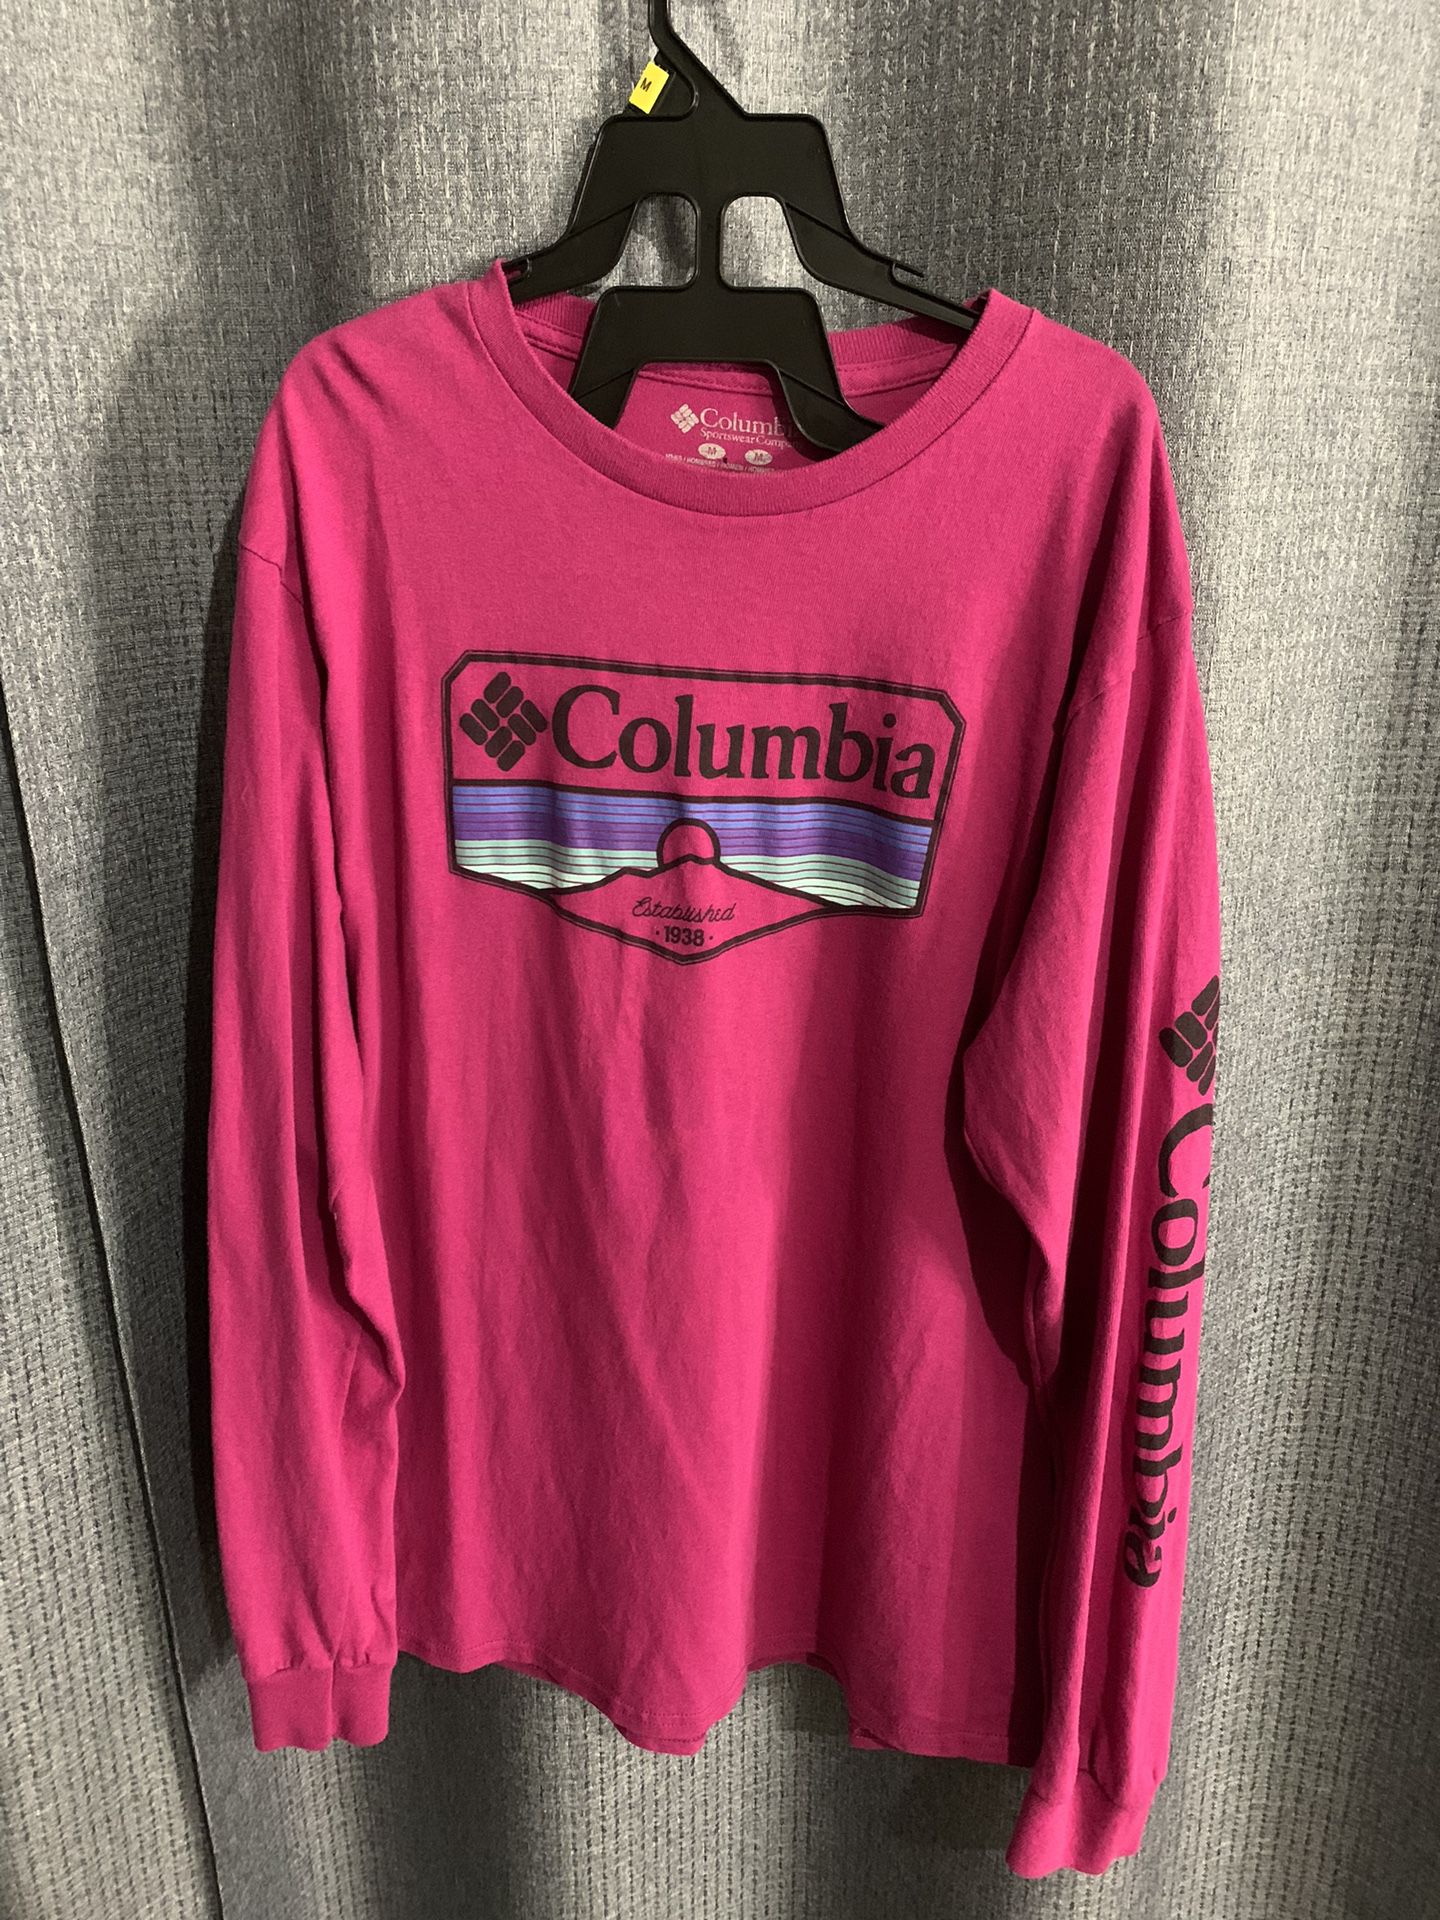 Columbia shirt size medium